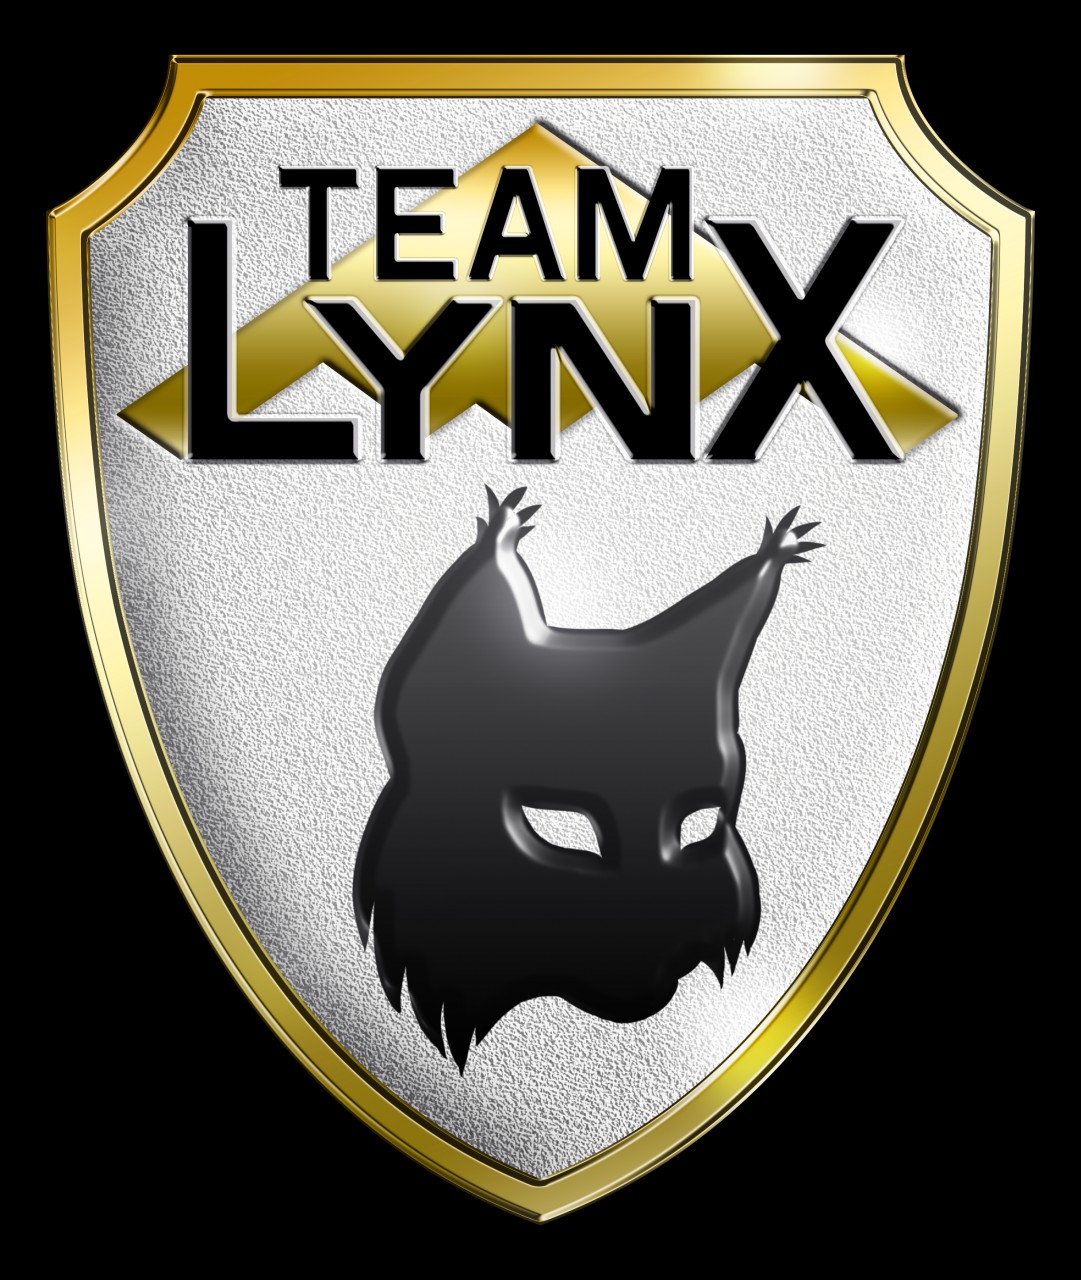 lynx logo